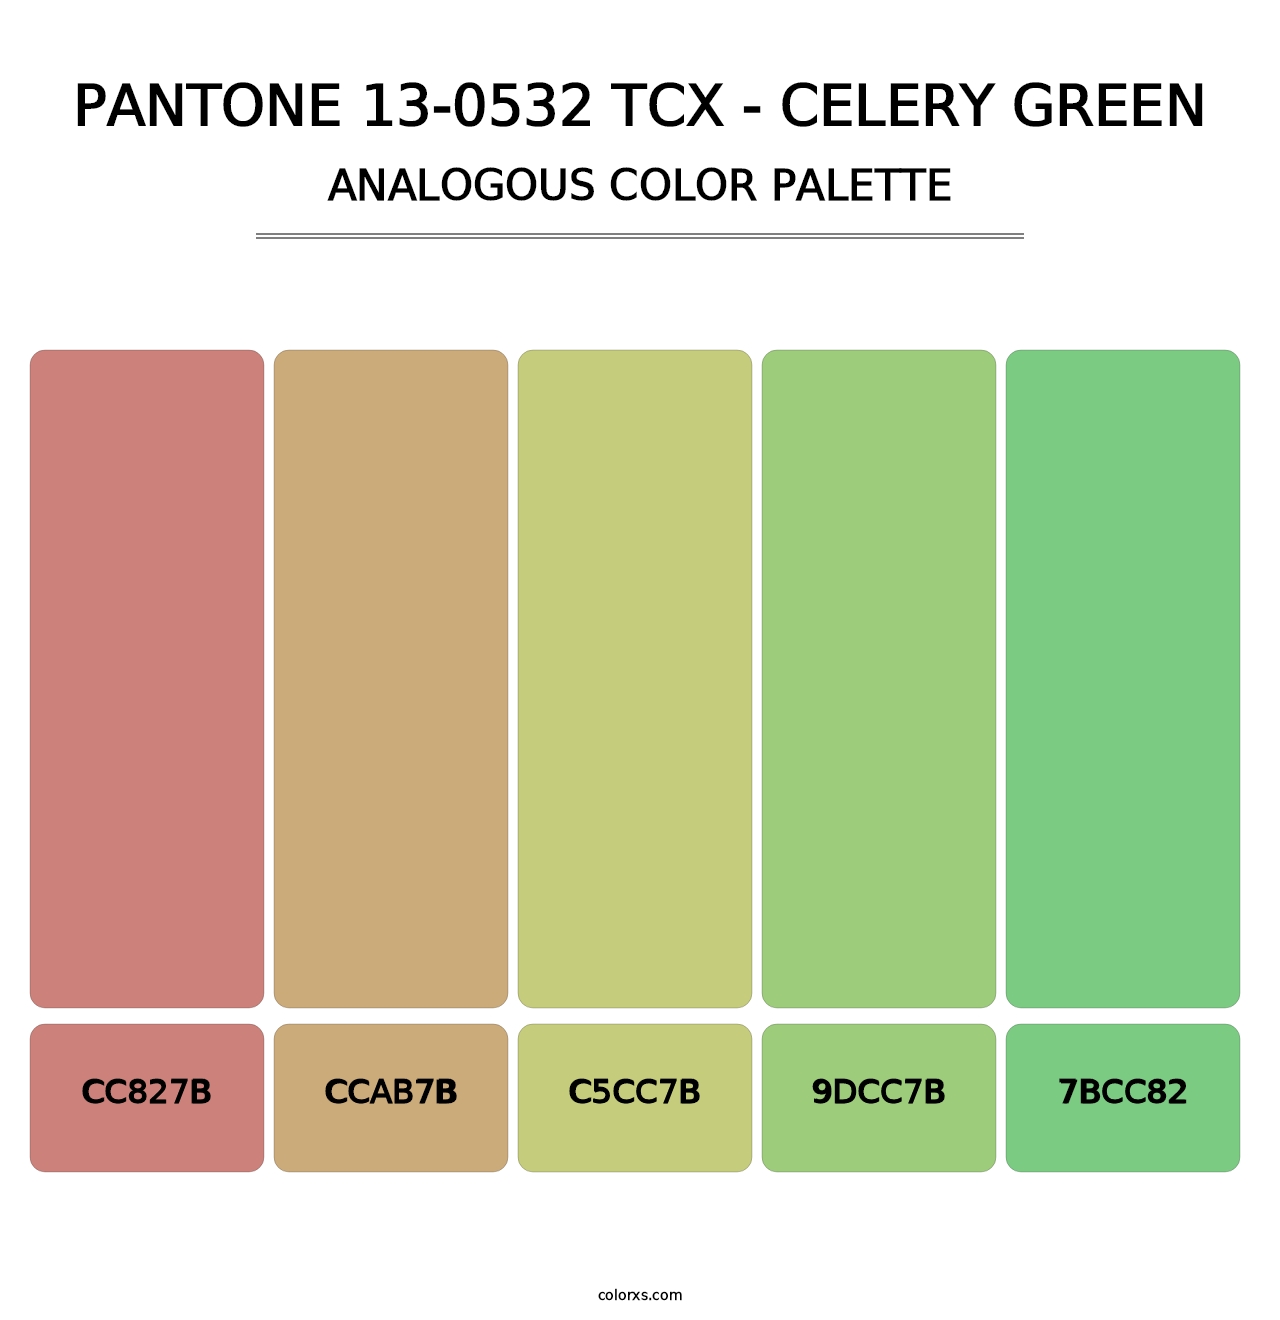 PANTONE 13-0532 TCX - Celery Green - Analogous Color Palette